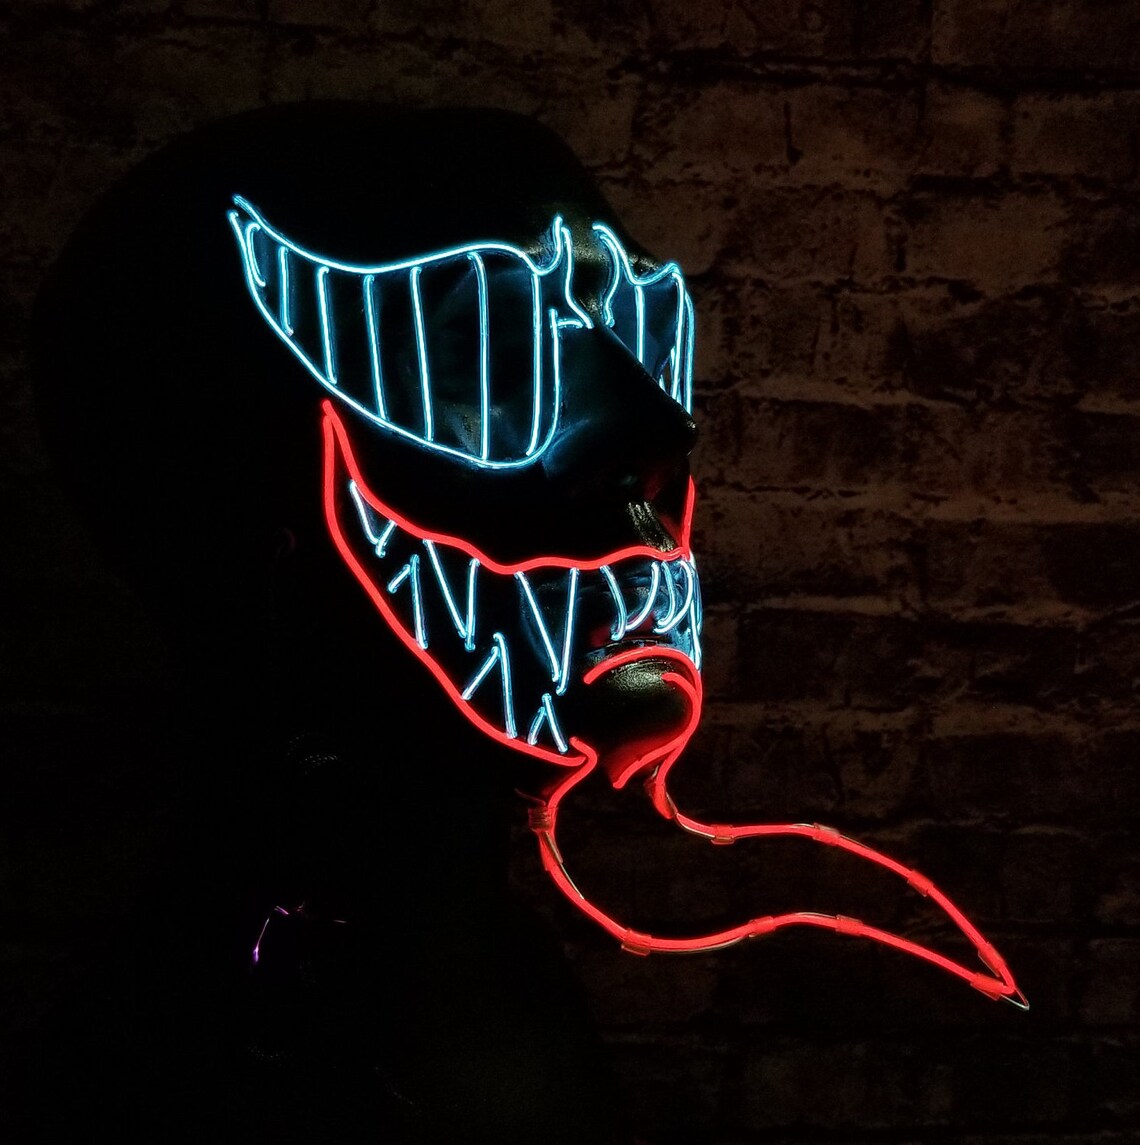 VENOM Style LED Light Up MaskEl WireSpider man3-DRave | Etsy